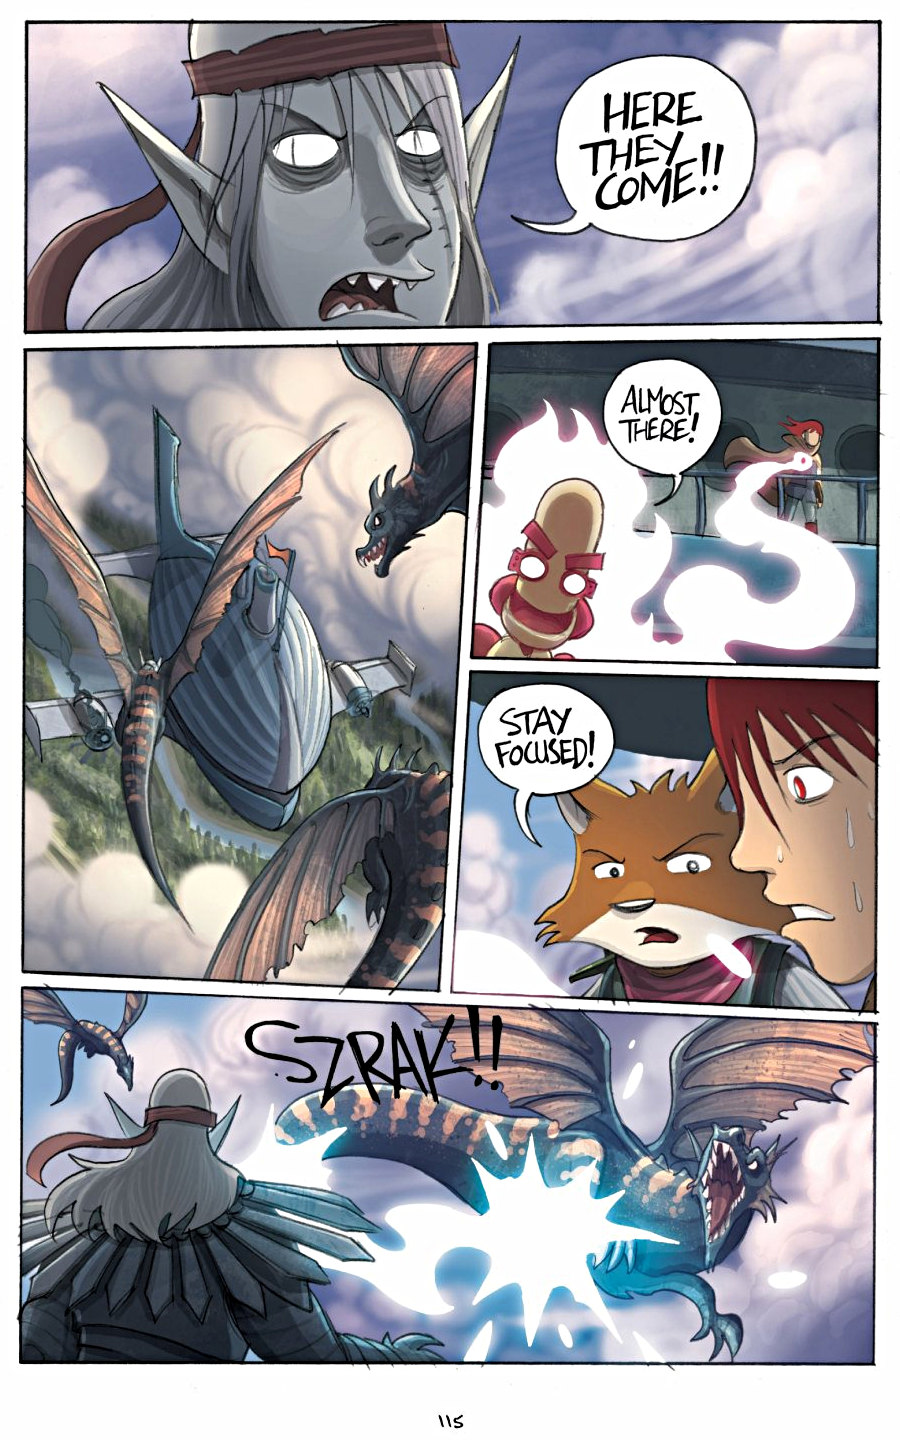 page 115 of amulet 3 cloud searchers graphic novel by kazu kibuishi